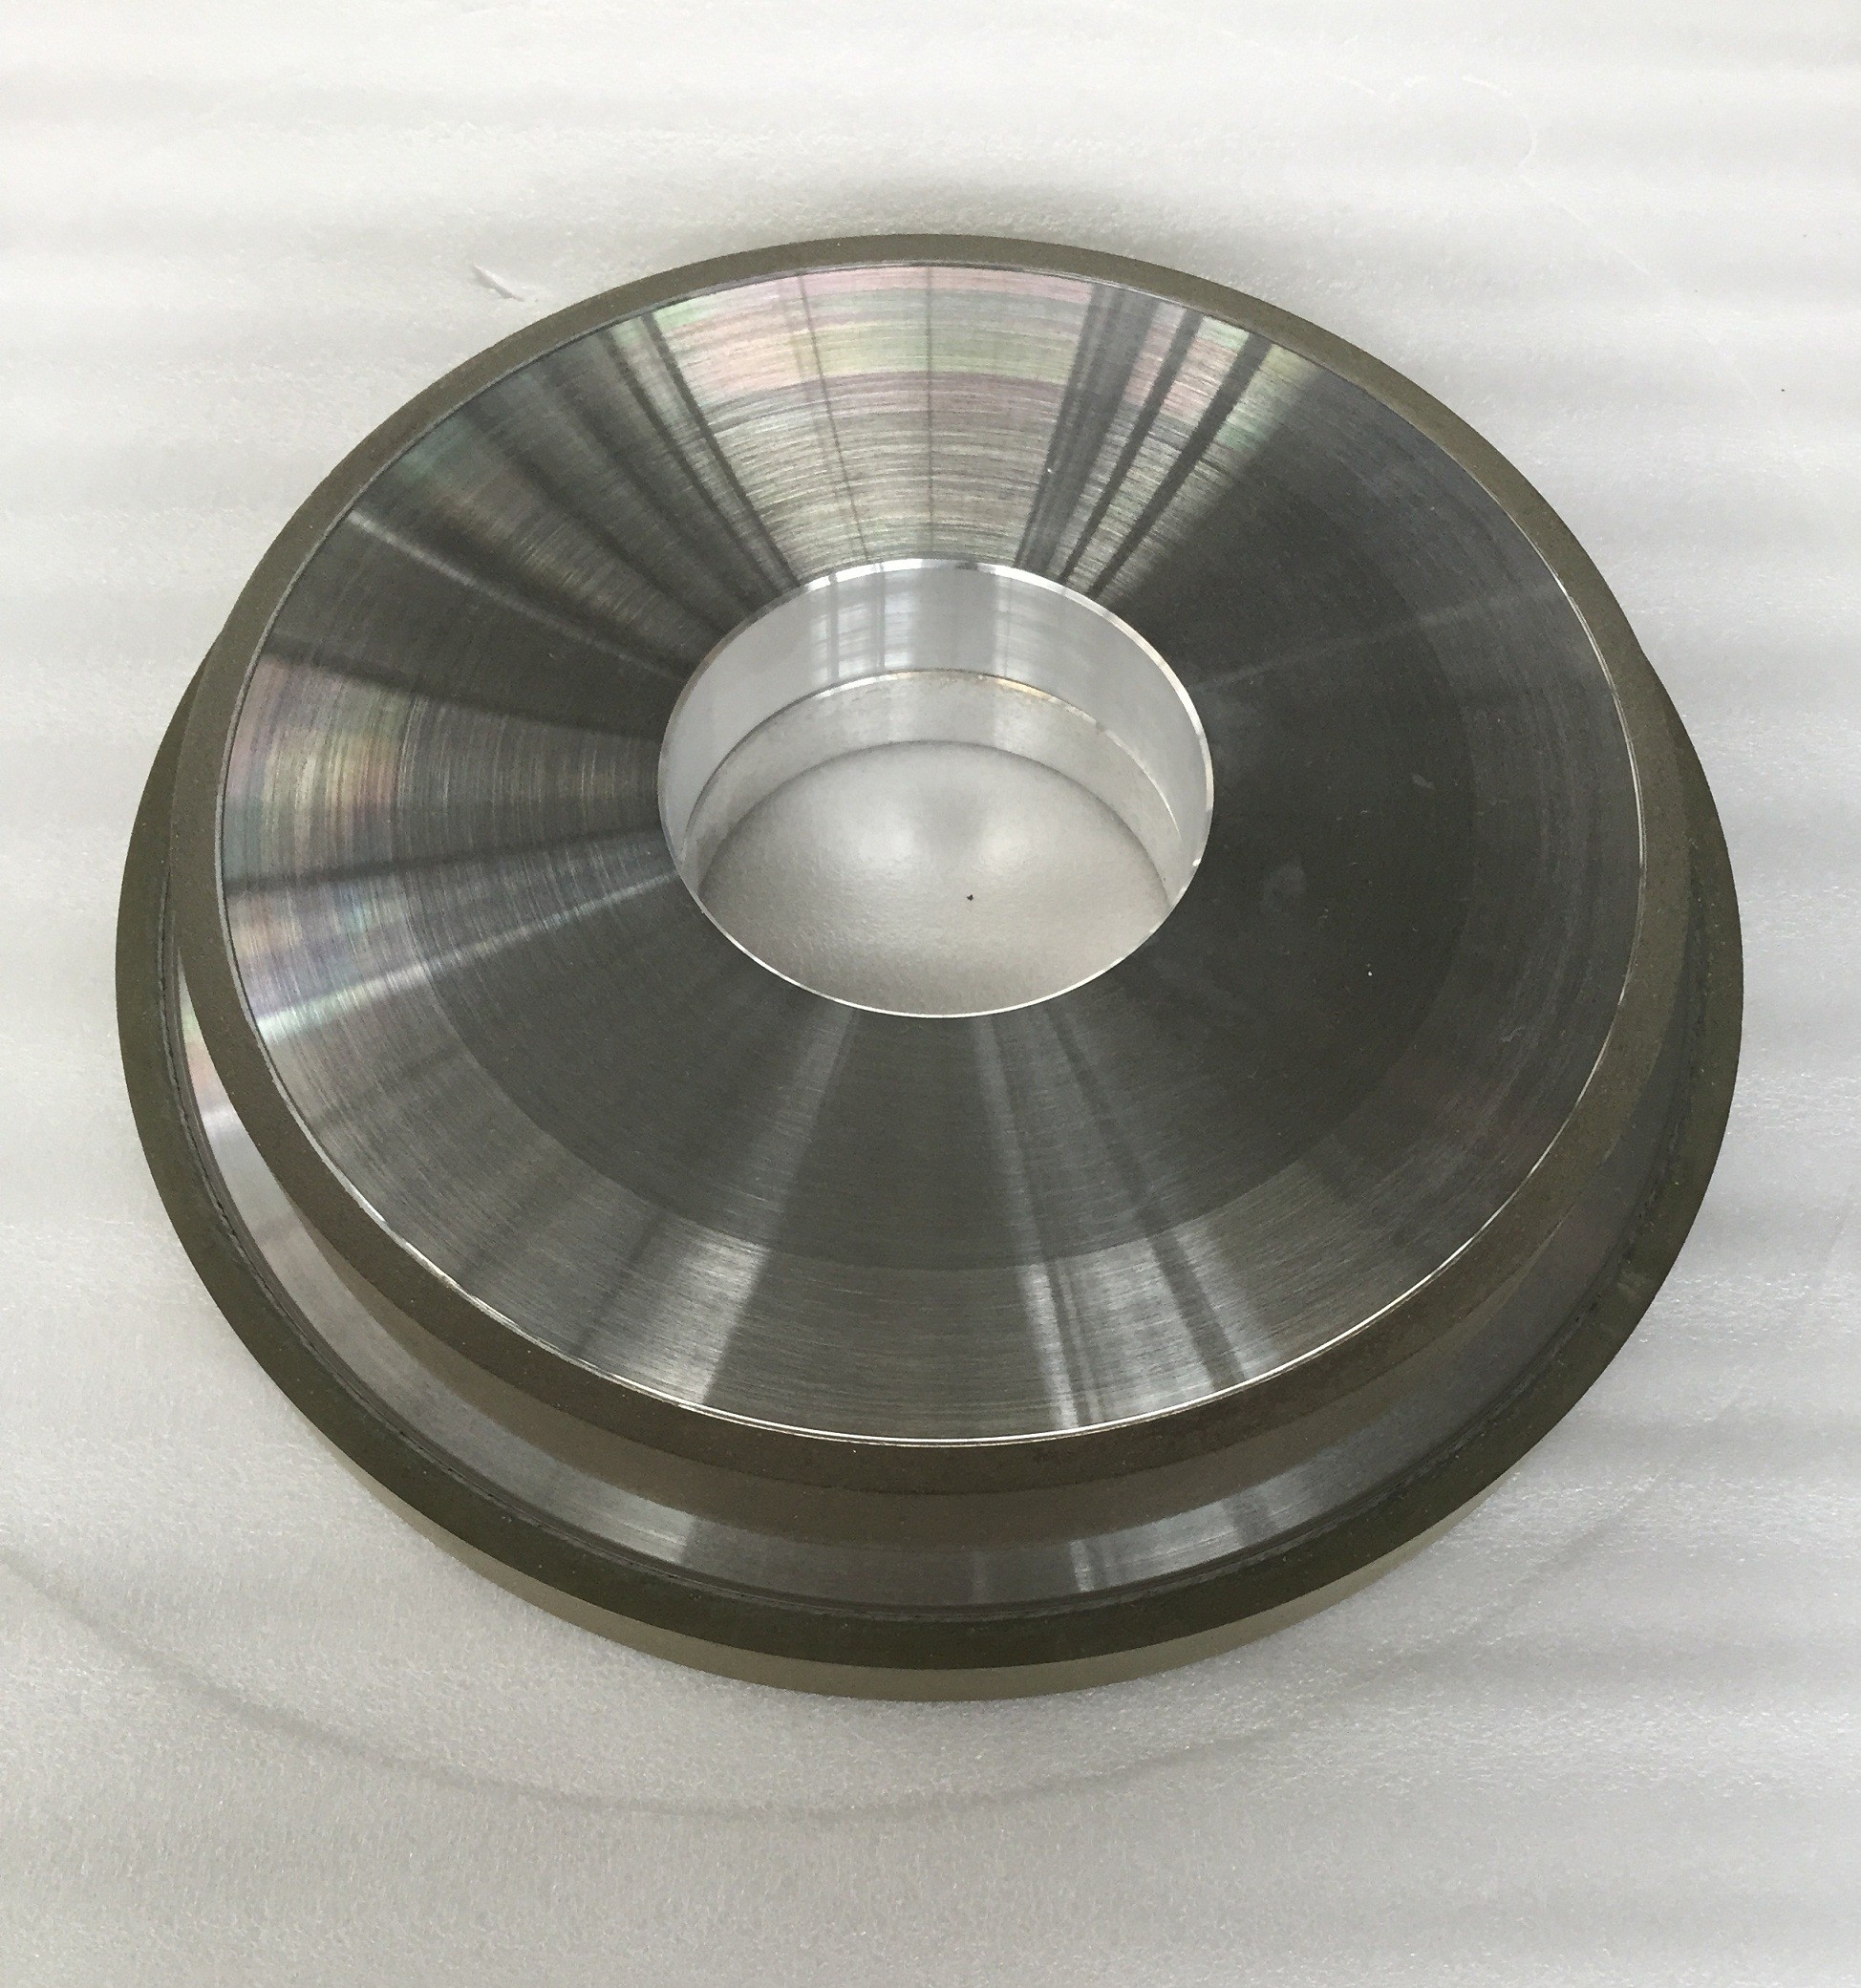 Abrasive Grit Resin Bonded Diamond Grinding Wheels Flat CBN Hole 127mm Width 10mm